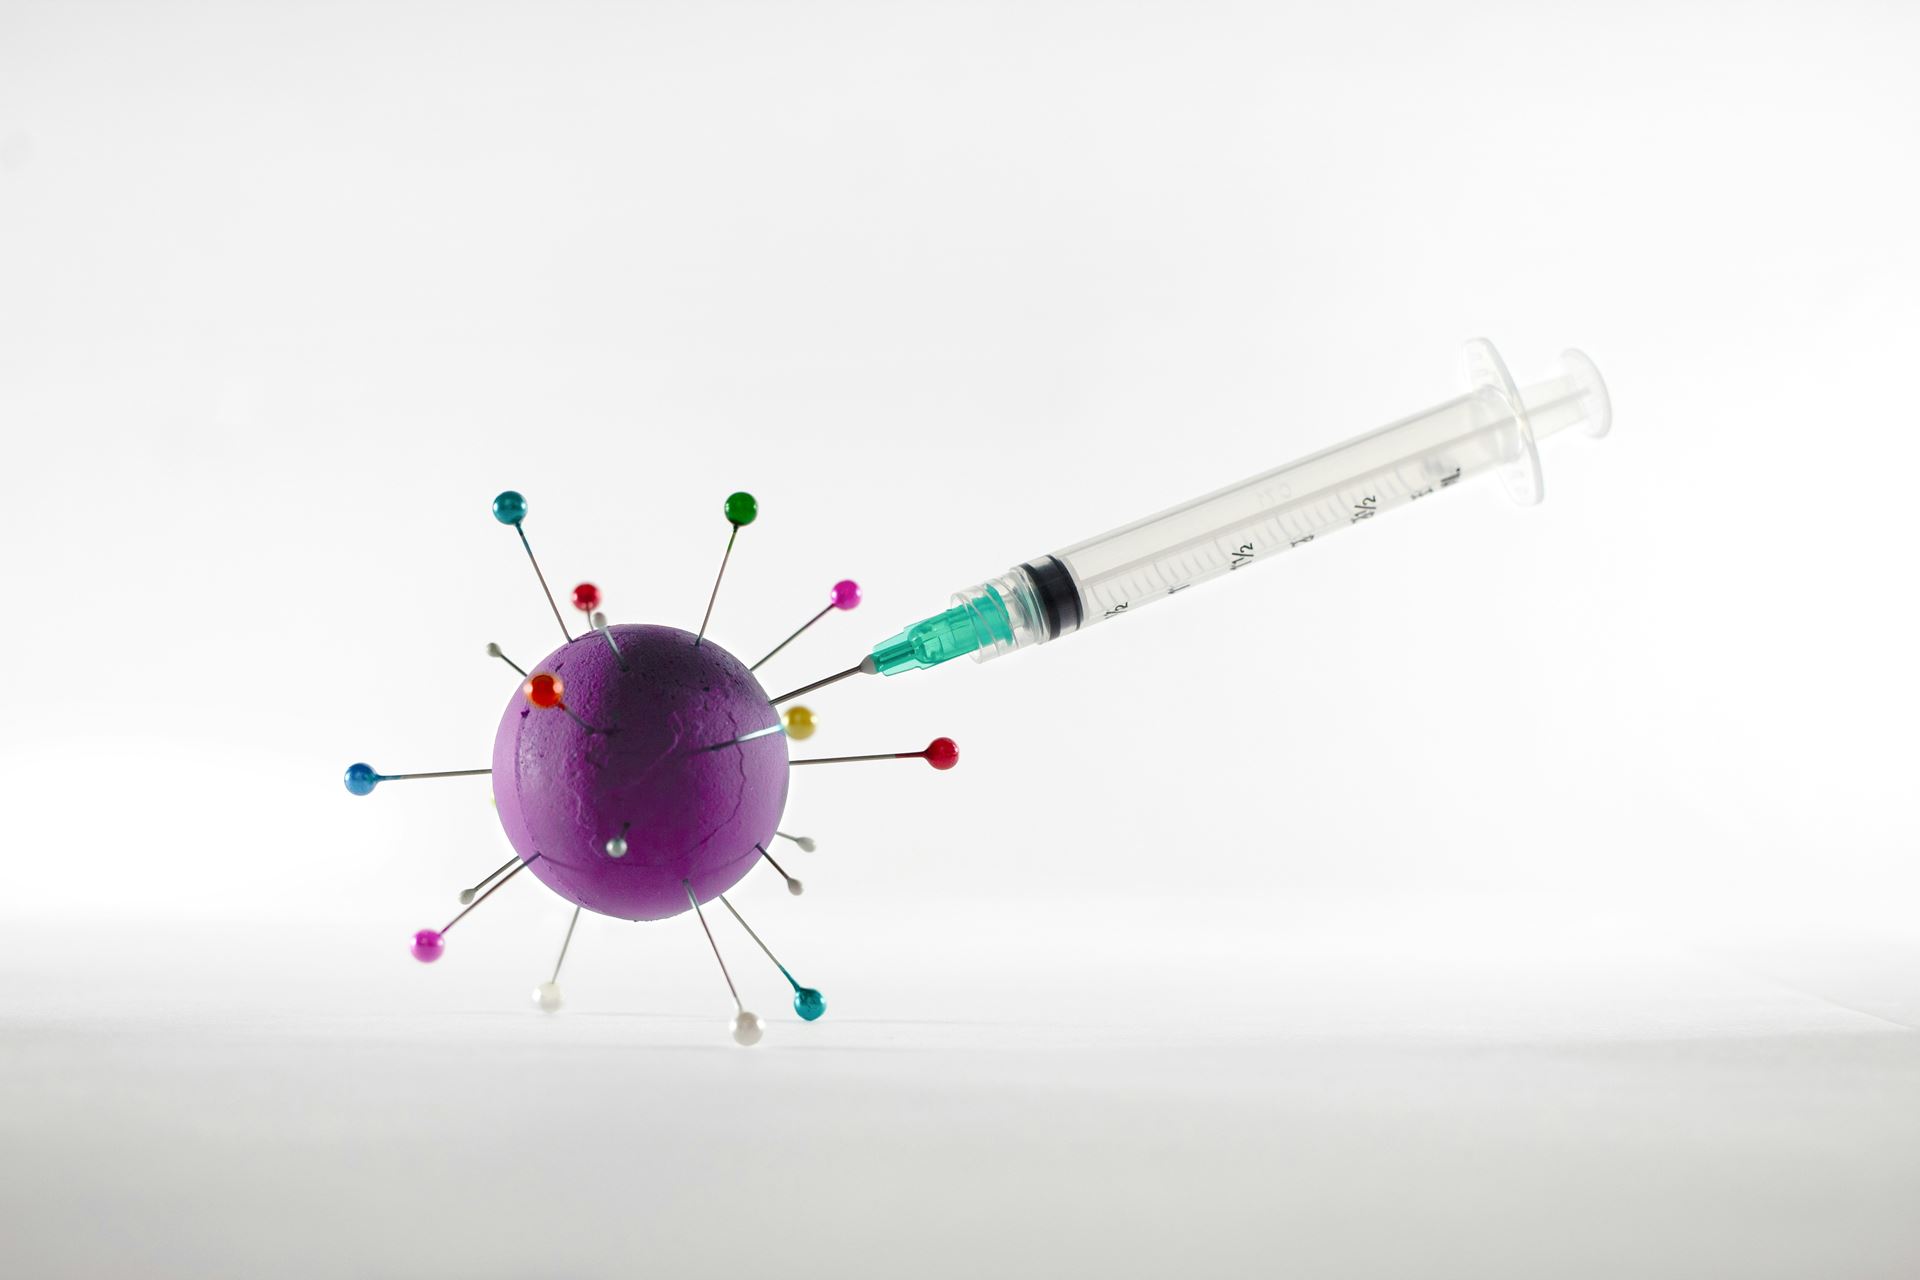 vaccination syringe